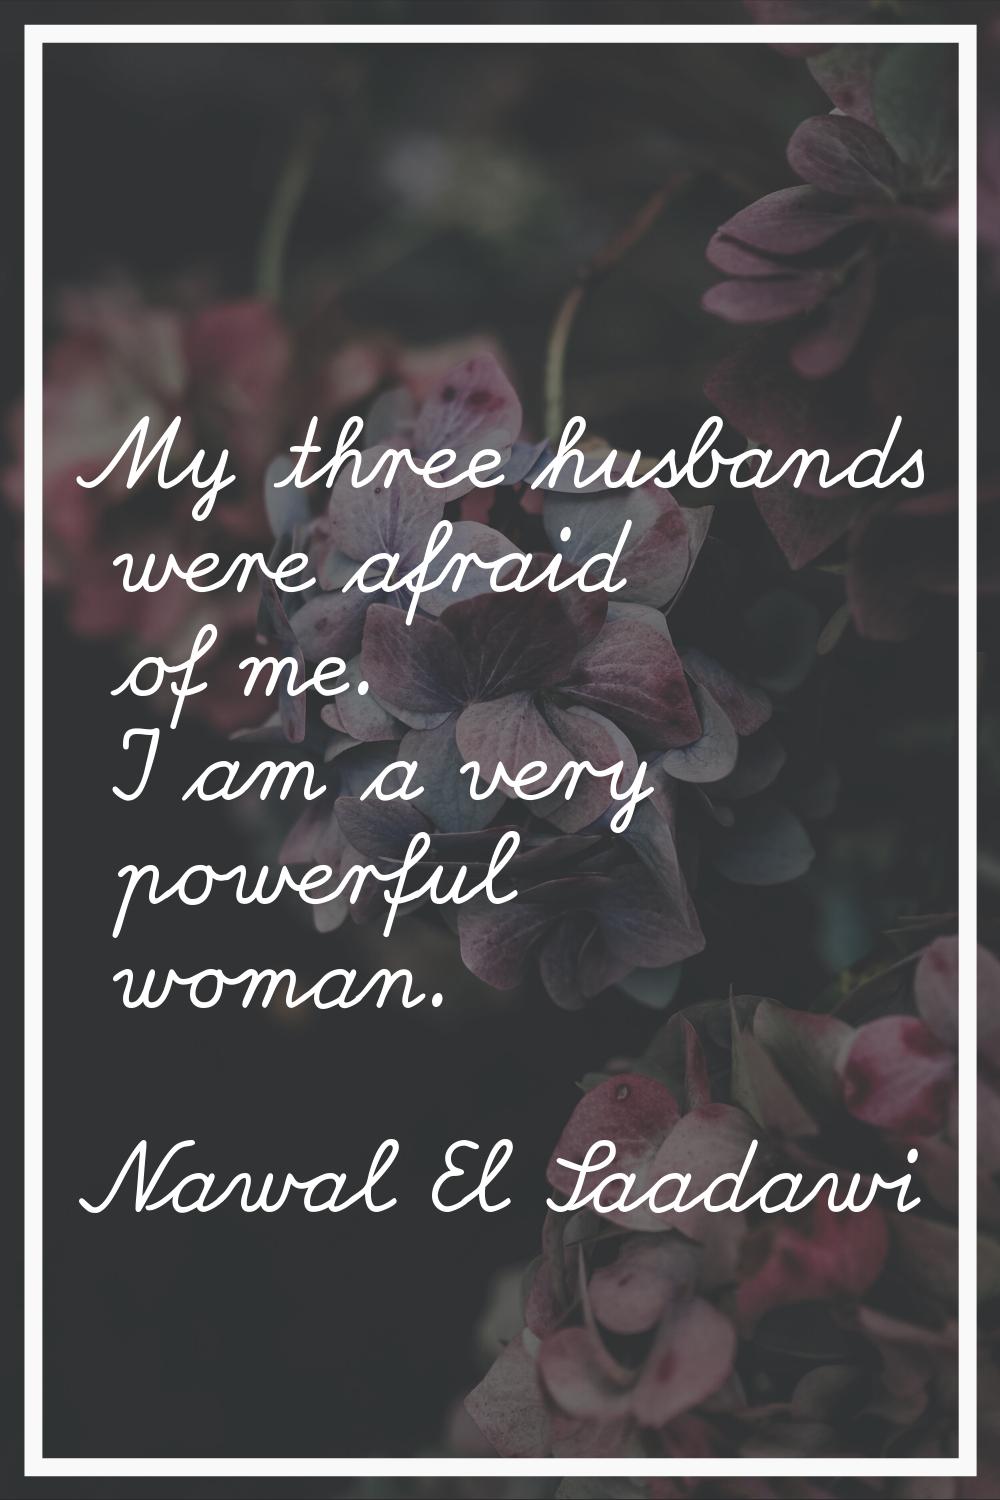 My three husbands were afraid of me. I am a very powerful woman.